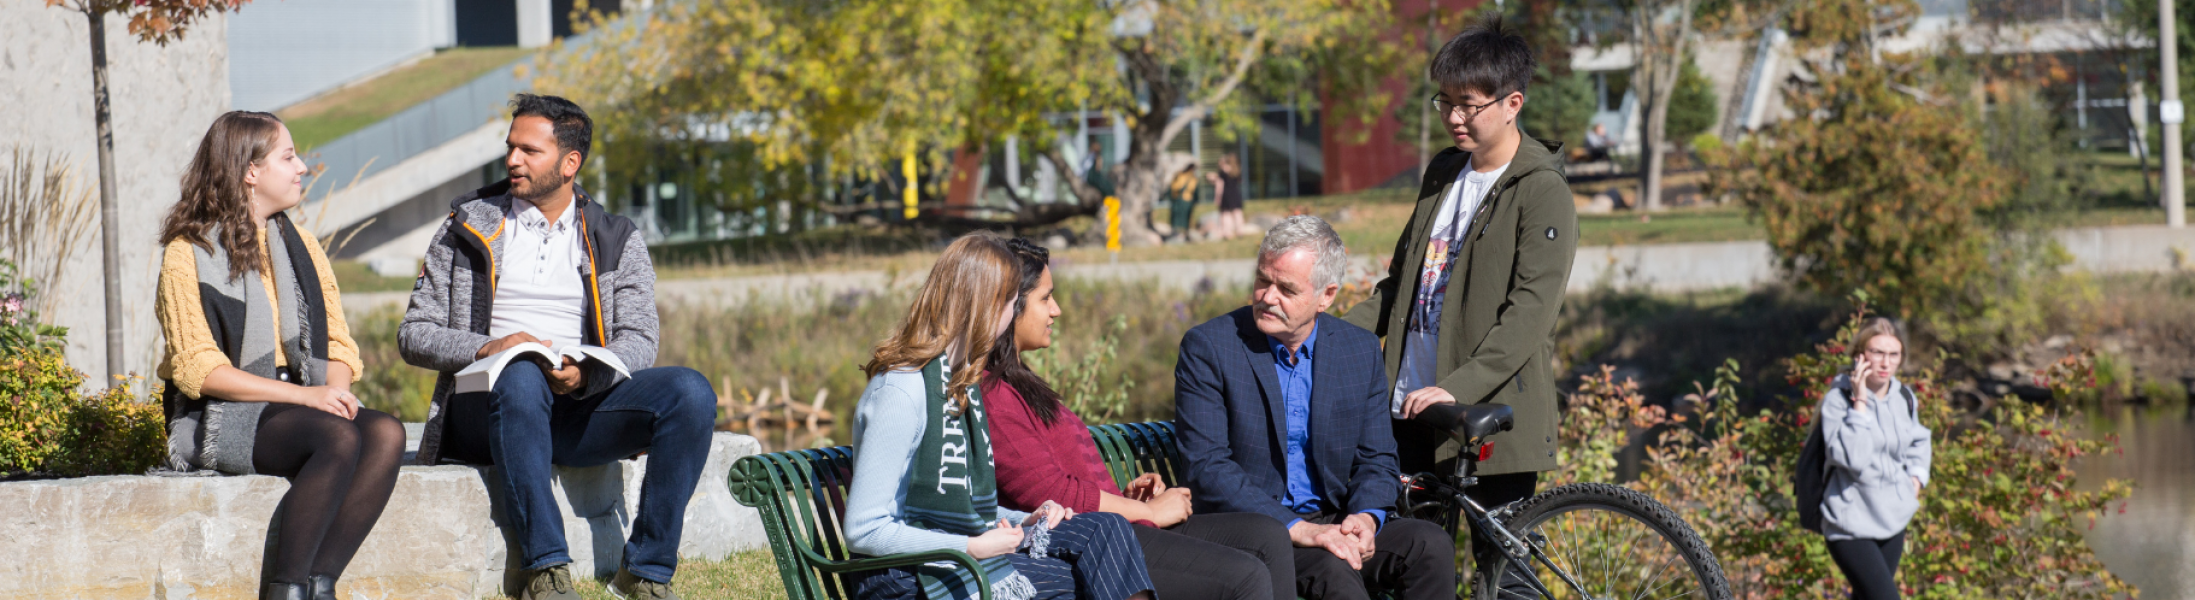 Students sitting on bench talking with Trent University President Leo Groarke